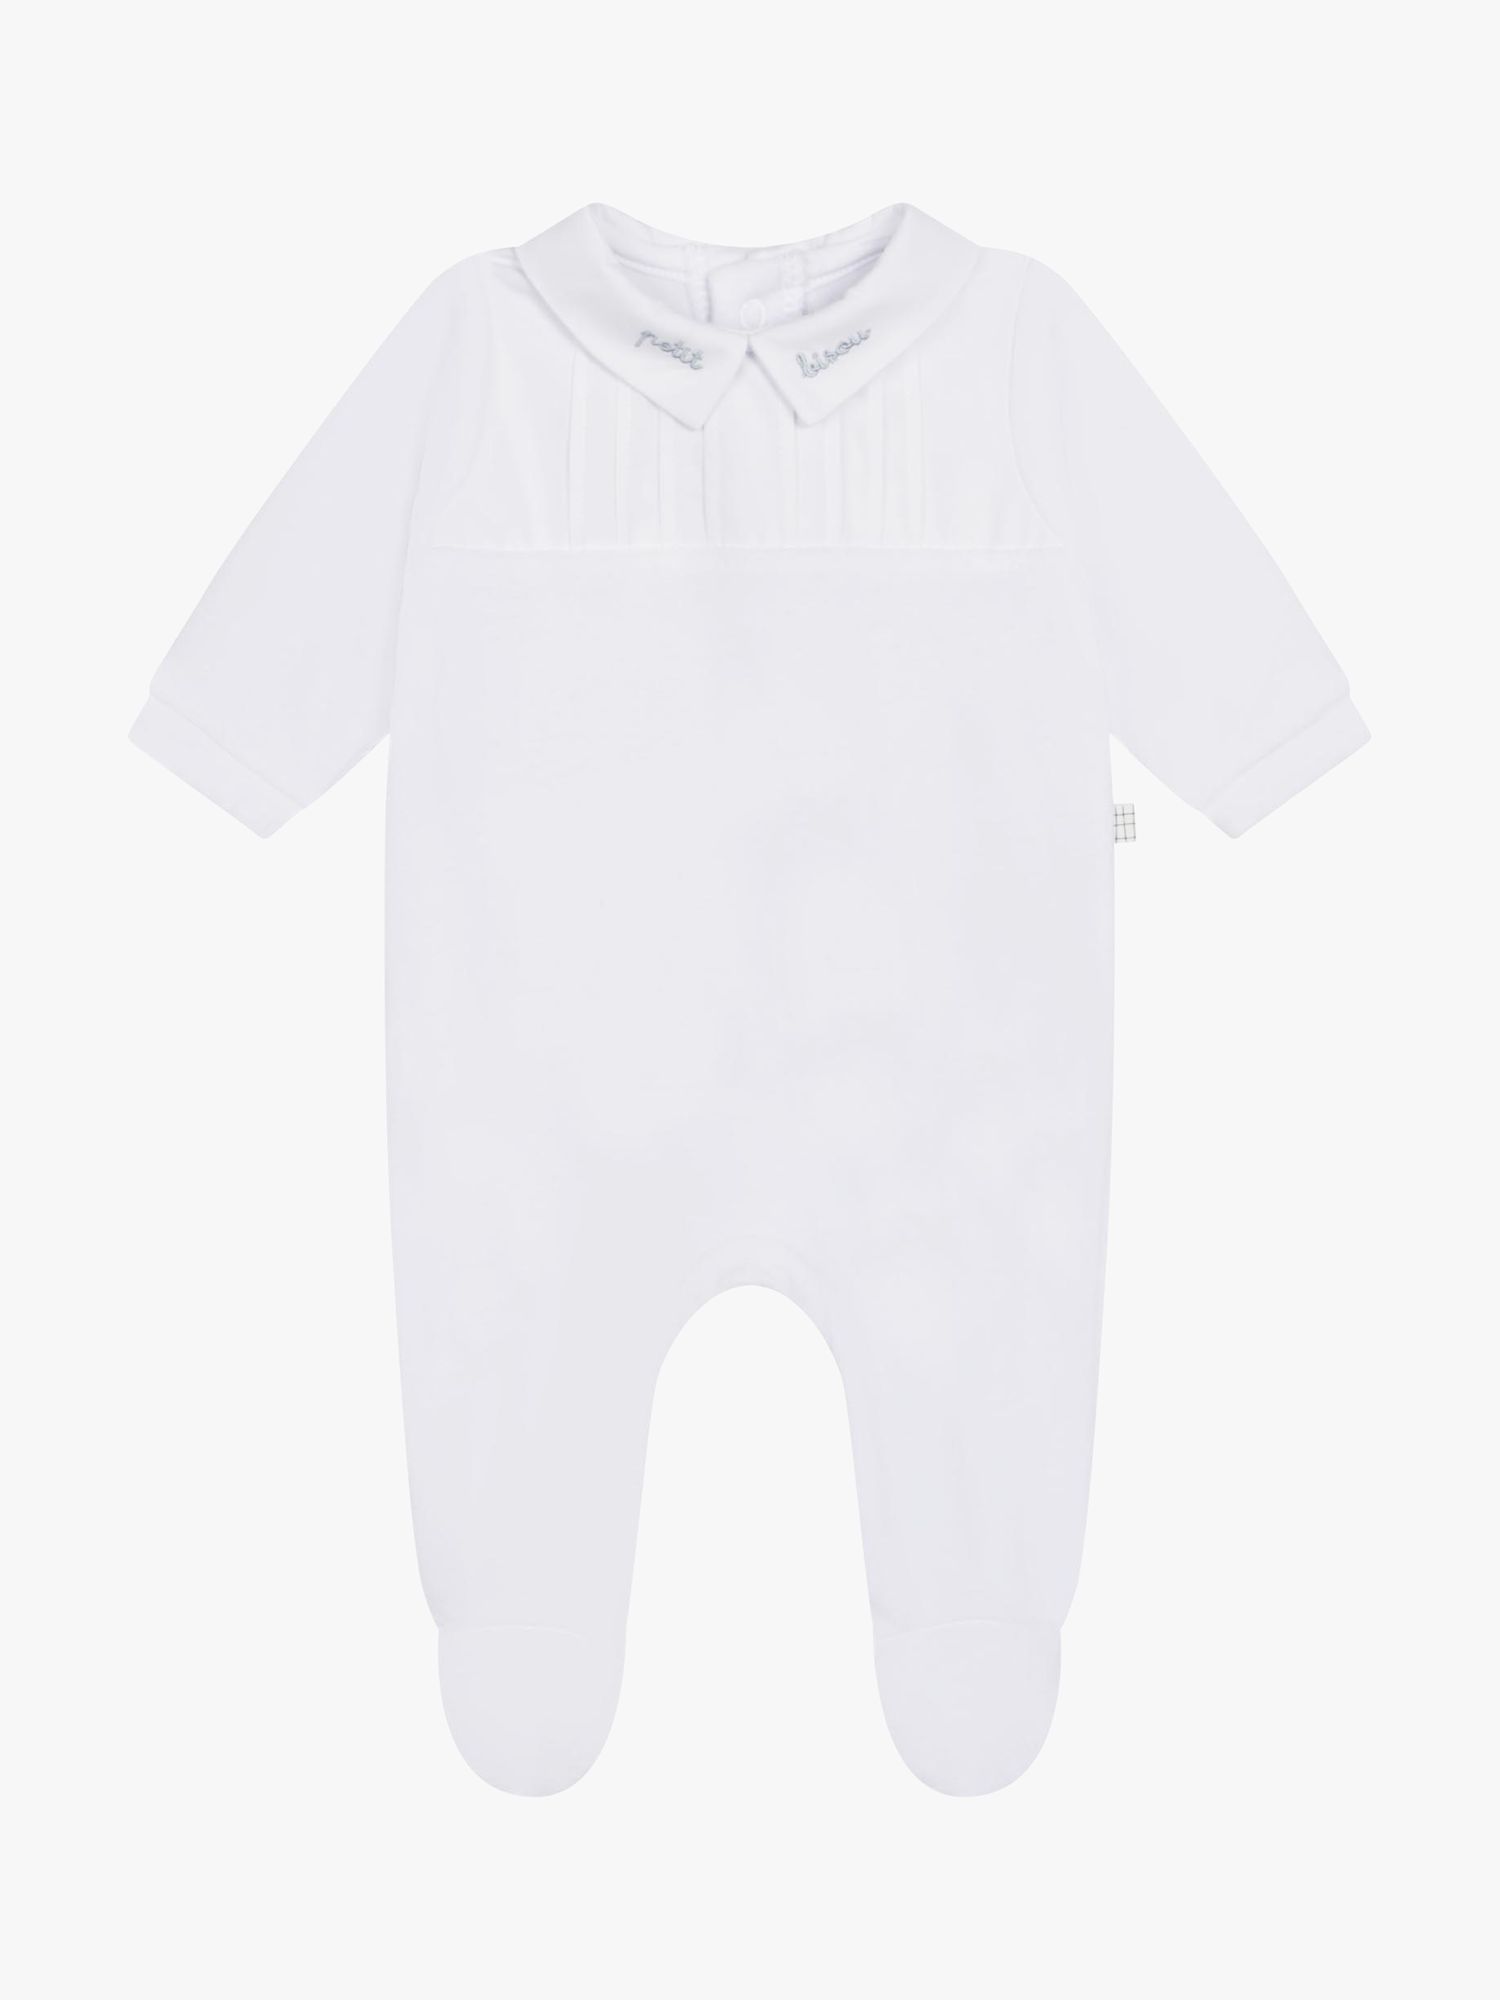 Carrément Beau Baby Pyjamas, White at John Lewis & Partners